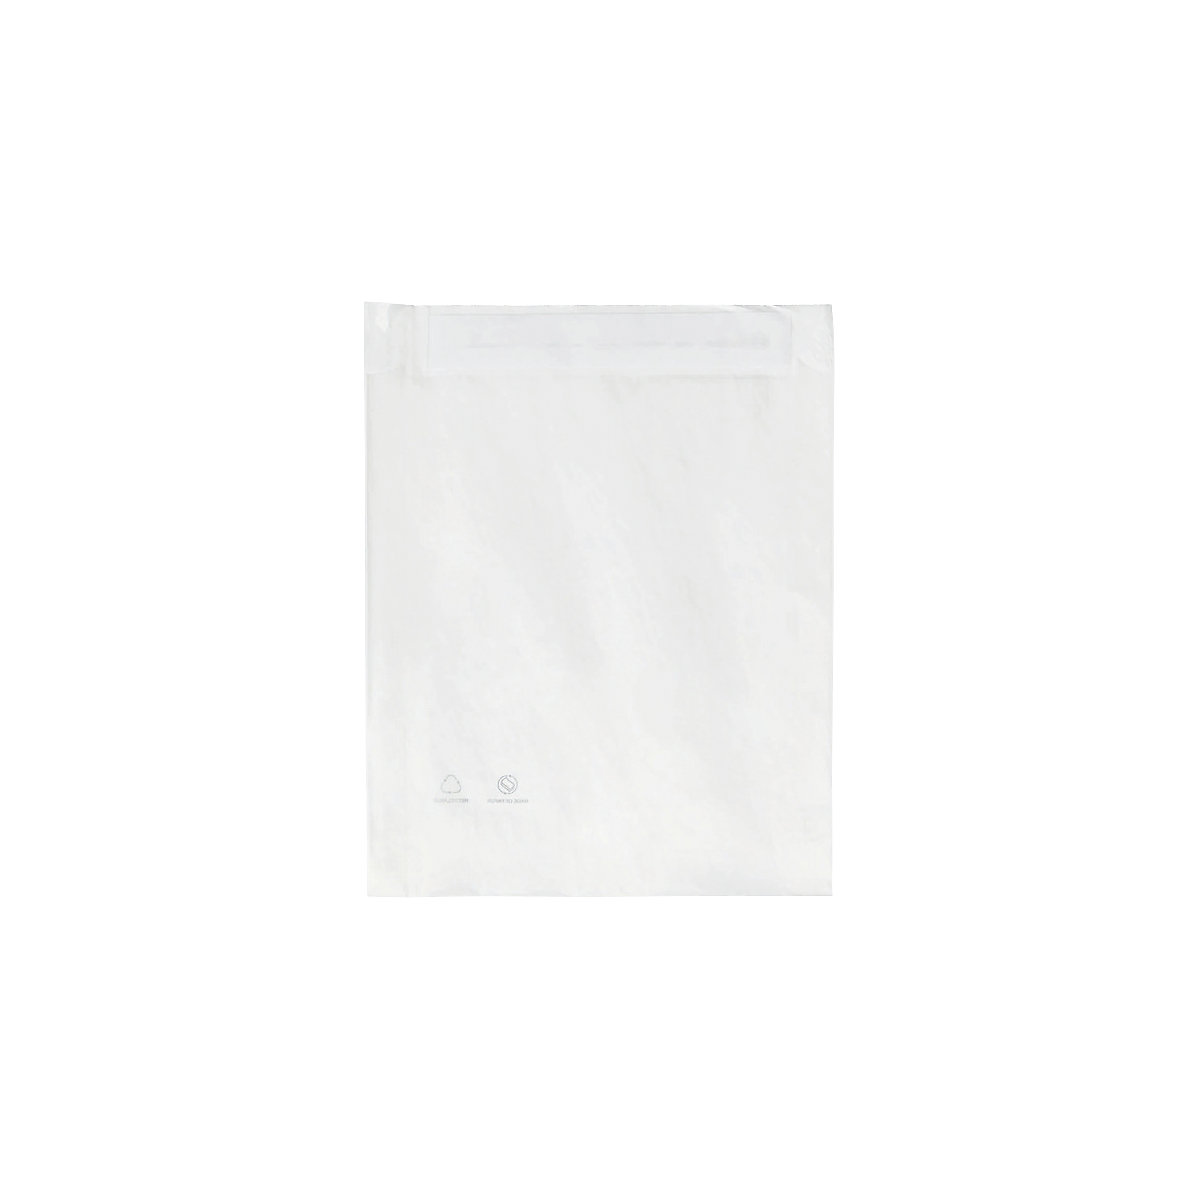 Sacchetti piatti con strisce adesive – terra, in carta pergamina, lungh. x largh. 300 x 250 mm, conf. da 250 pz.-1